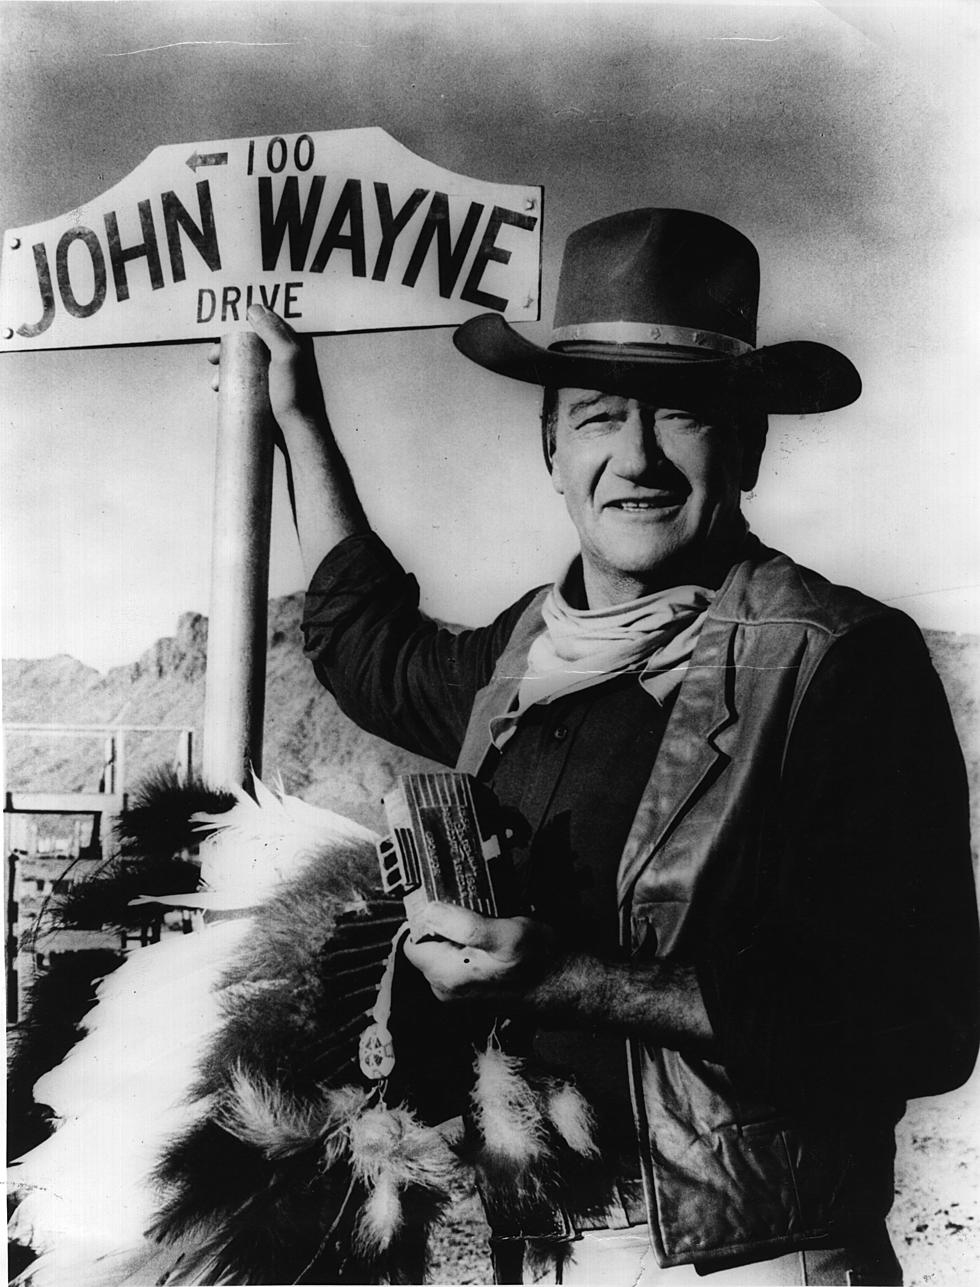 John Wayne Under Attack for Racism